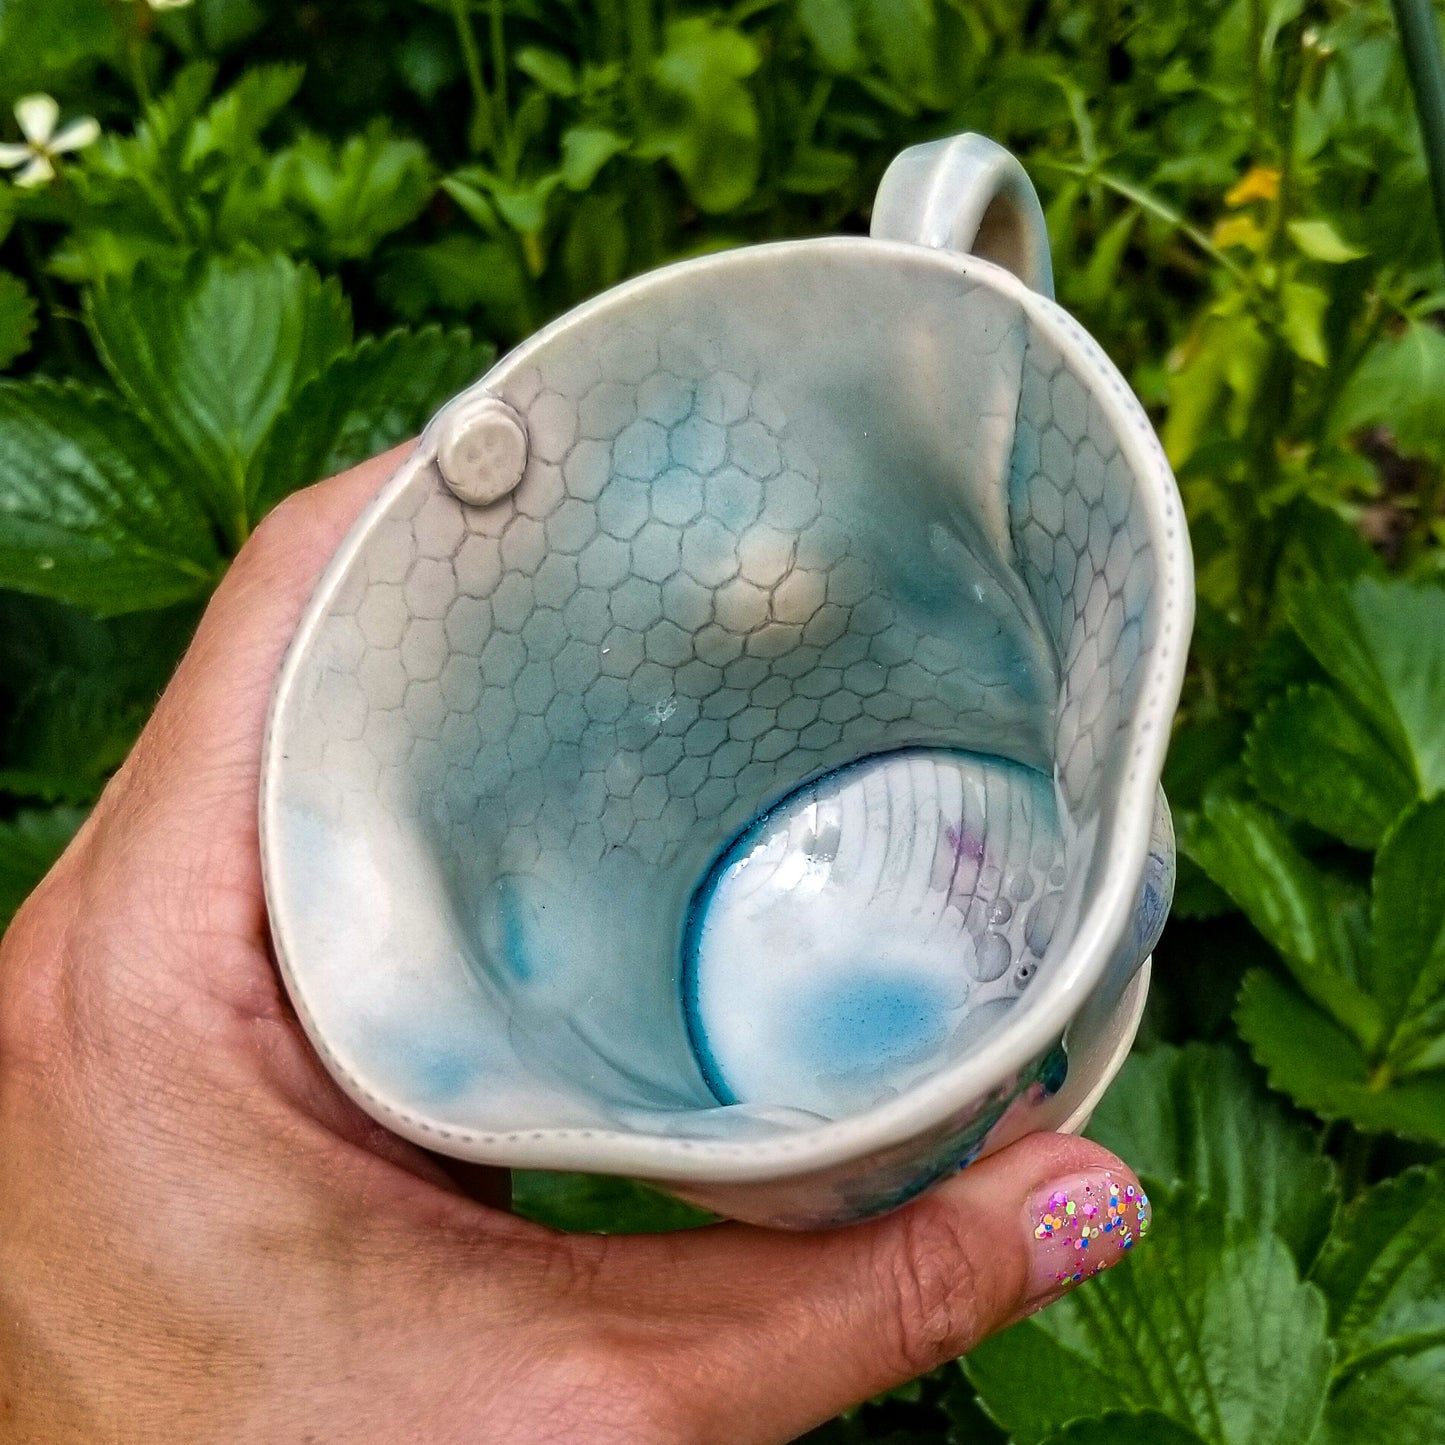 Inside detail of handmade stoneware ceramic mug blue color with pressed textures